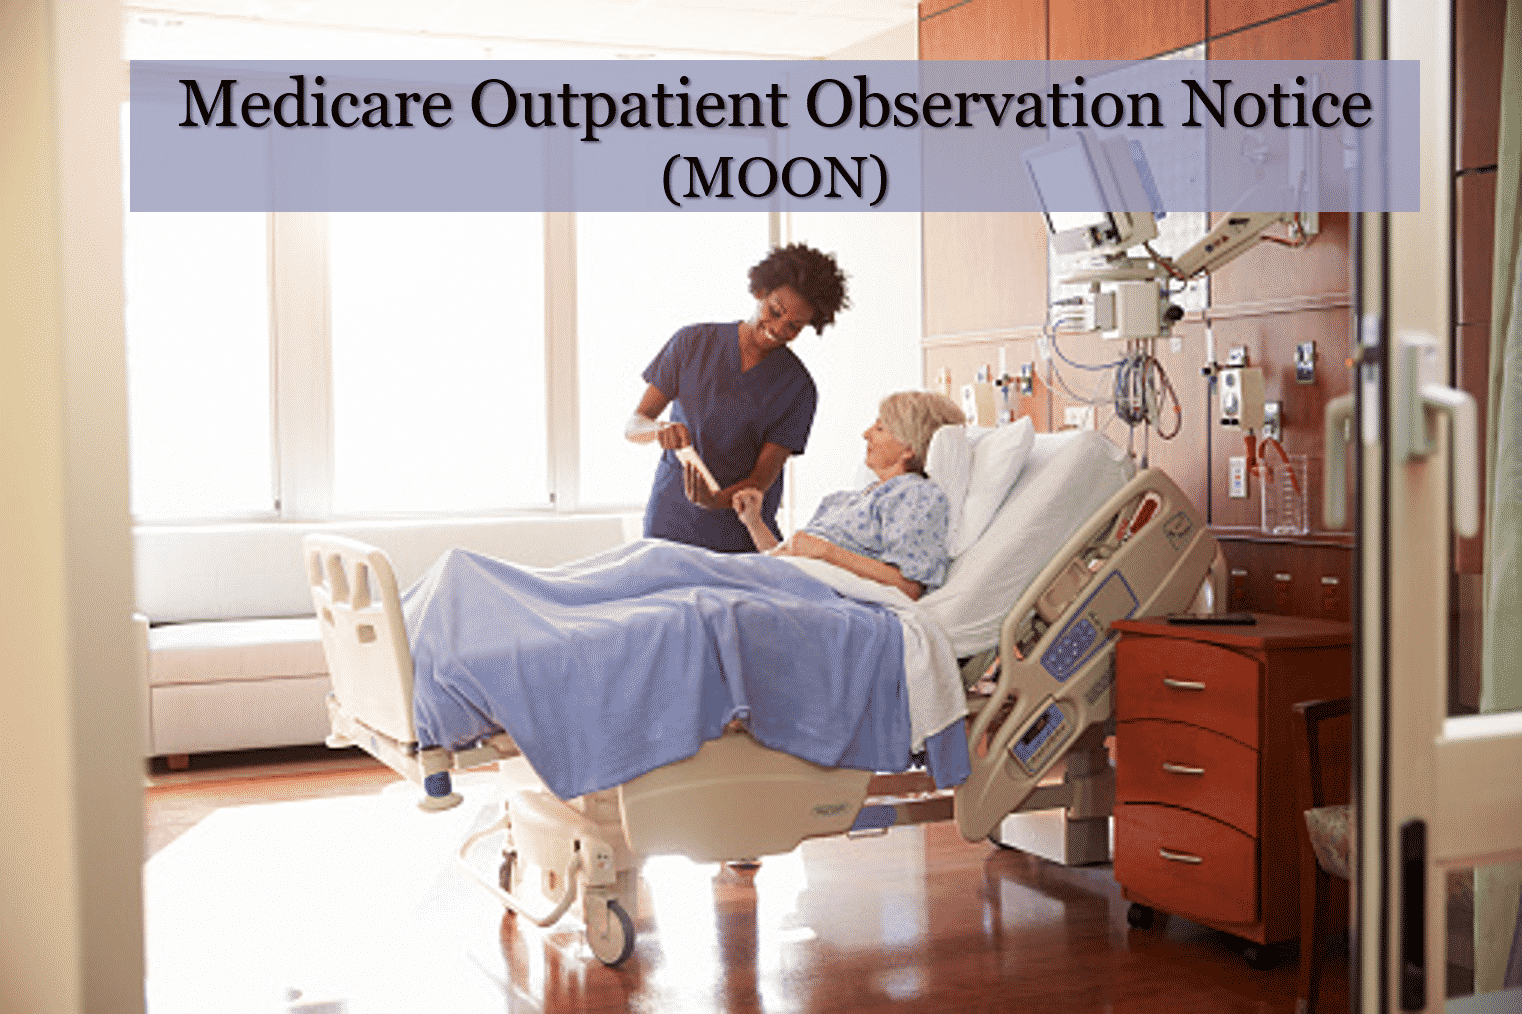 Medicare Outpatient Observation Notice (MOON)